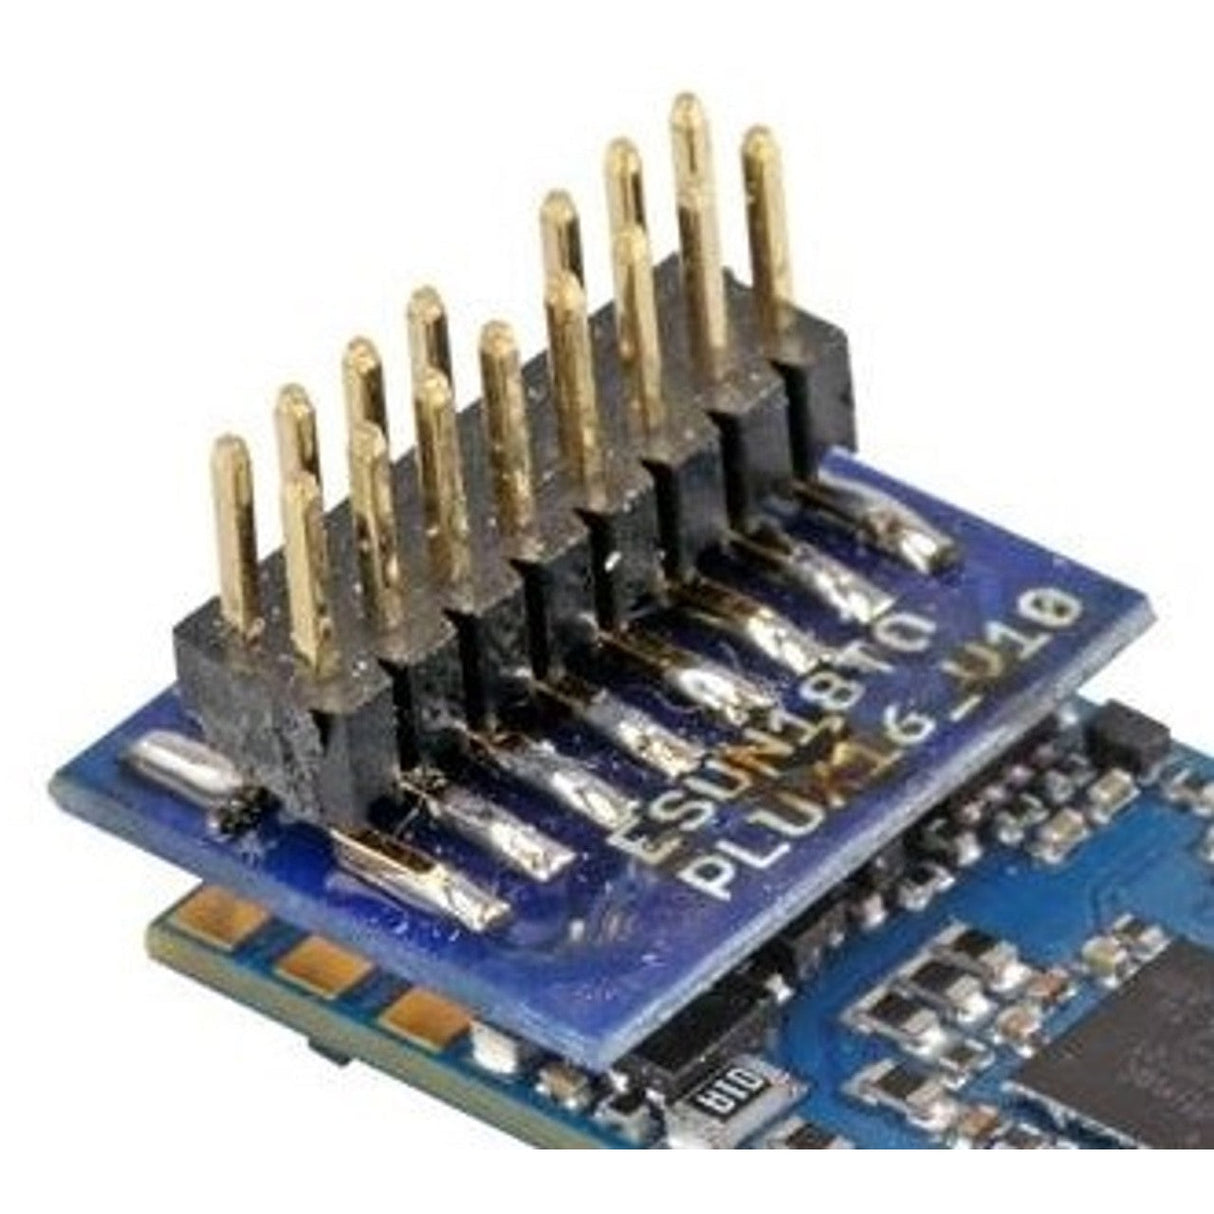 ESU adapter board, 18-pin Next-18 socket to Plux16